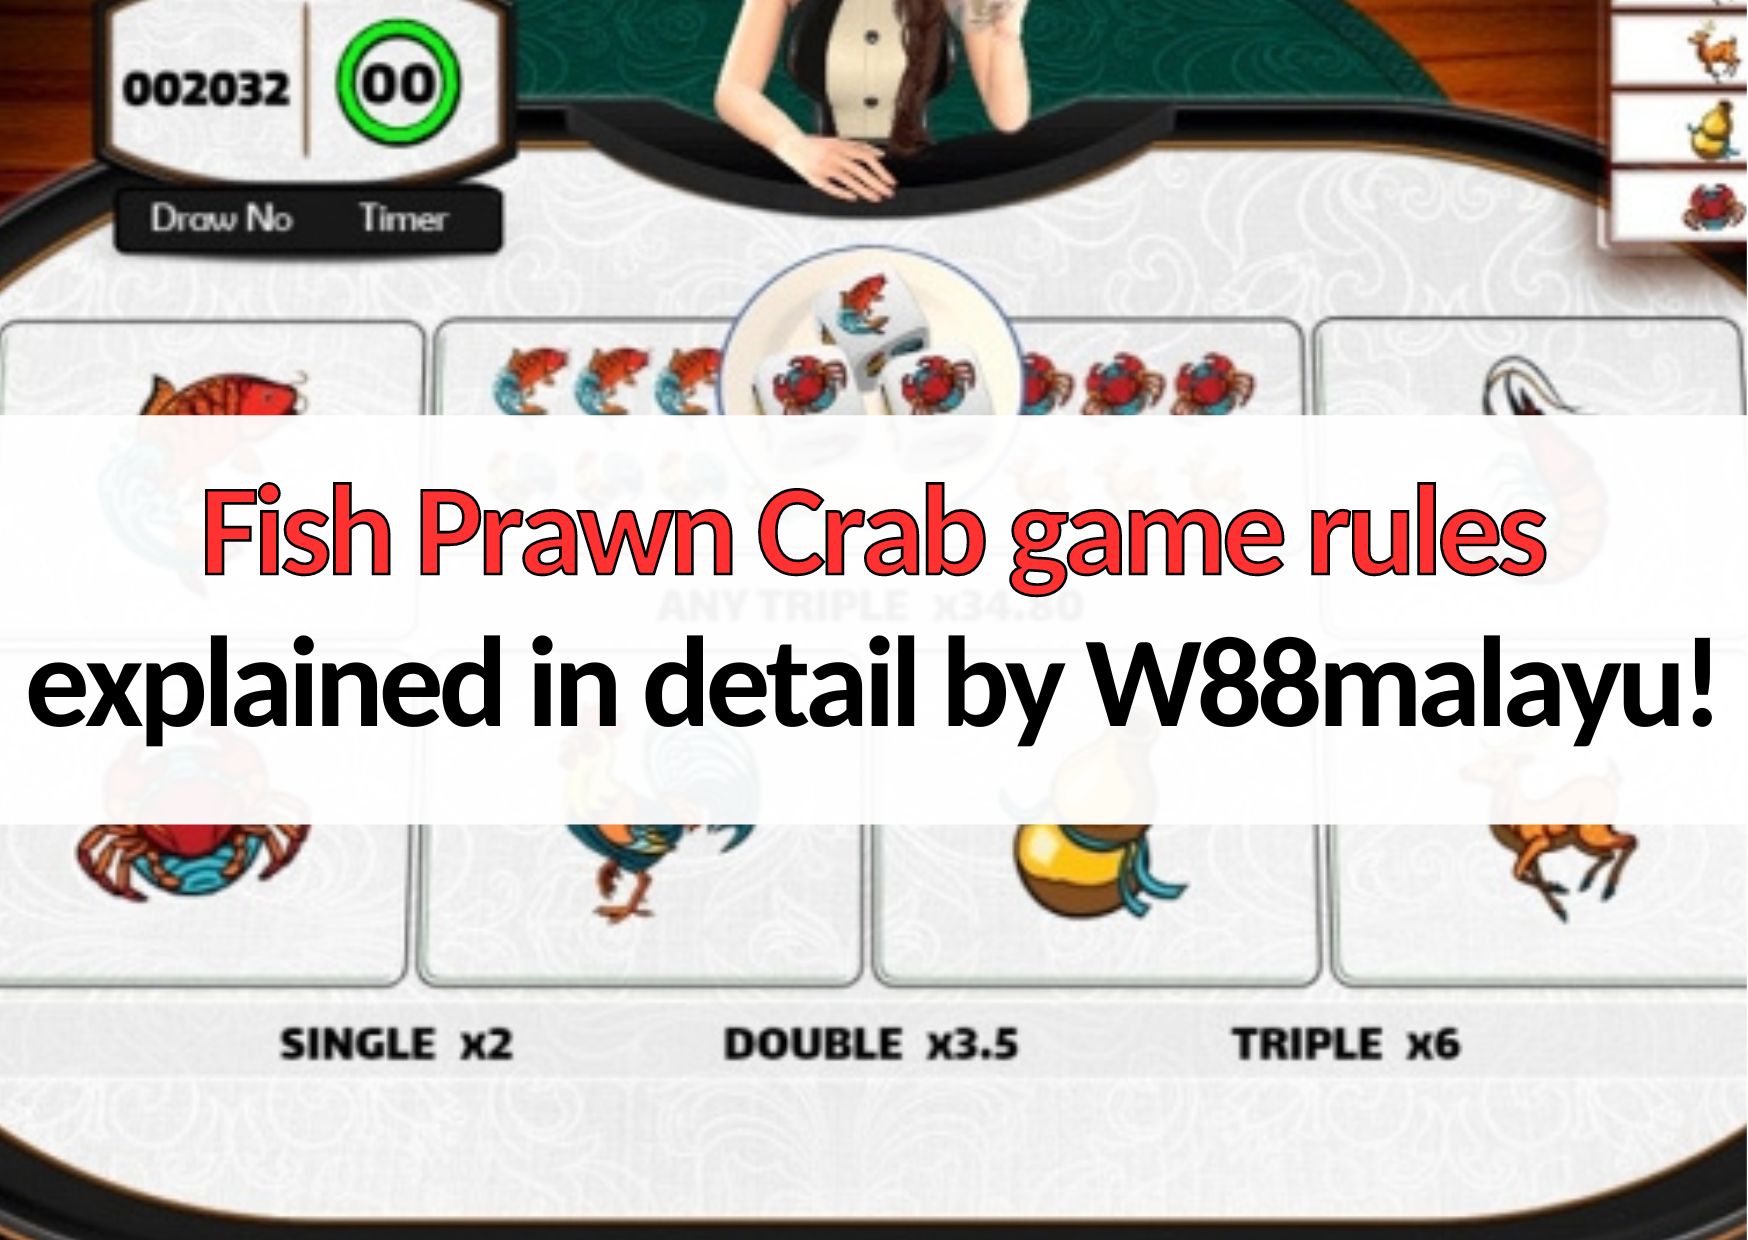 w88malayu Fish Prawn Crab game rules